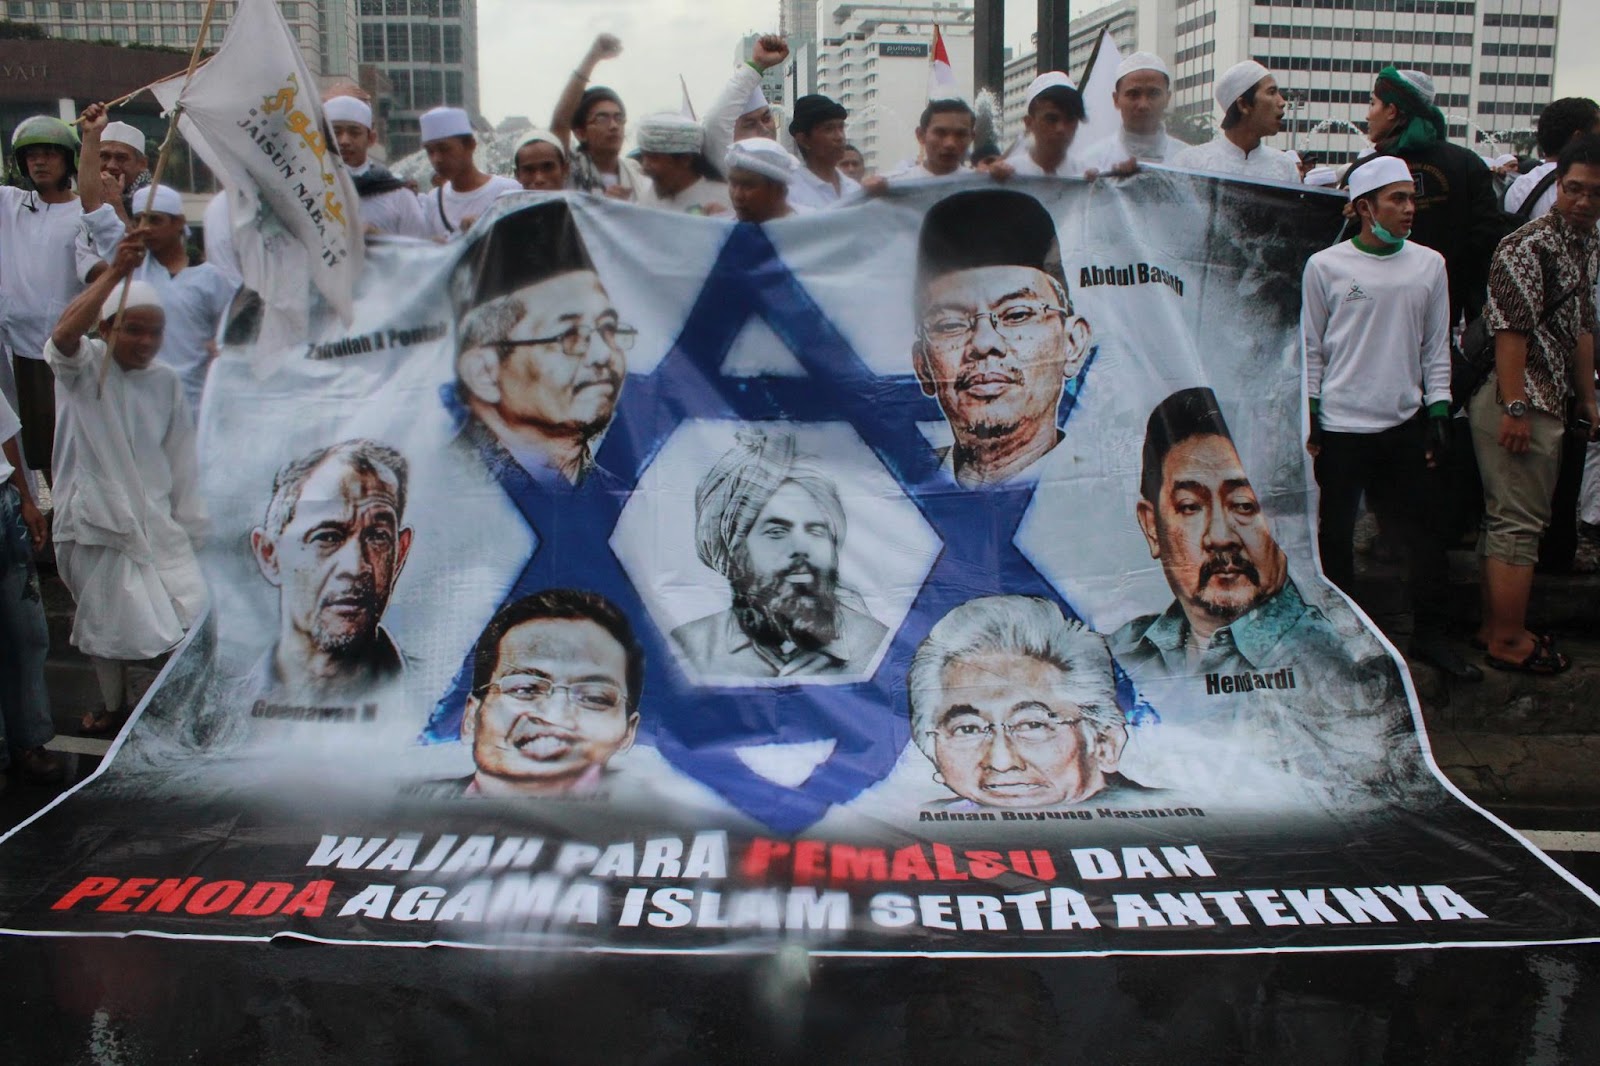 wyatttwirp: Wallpaper Pejuang Islam